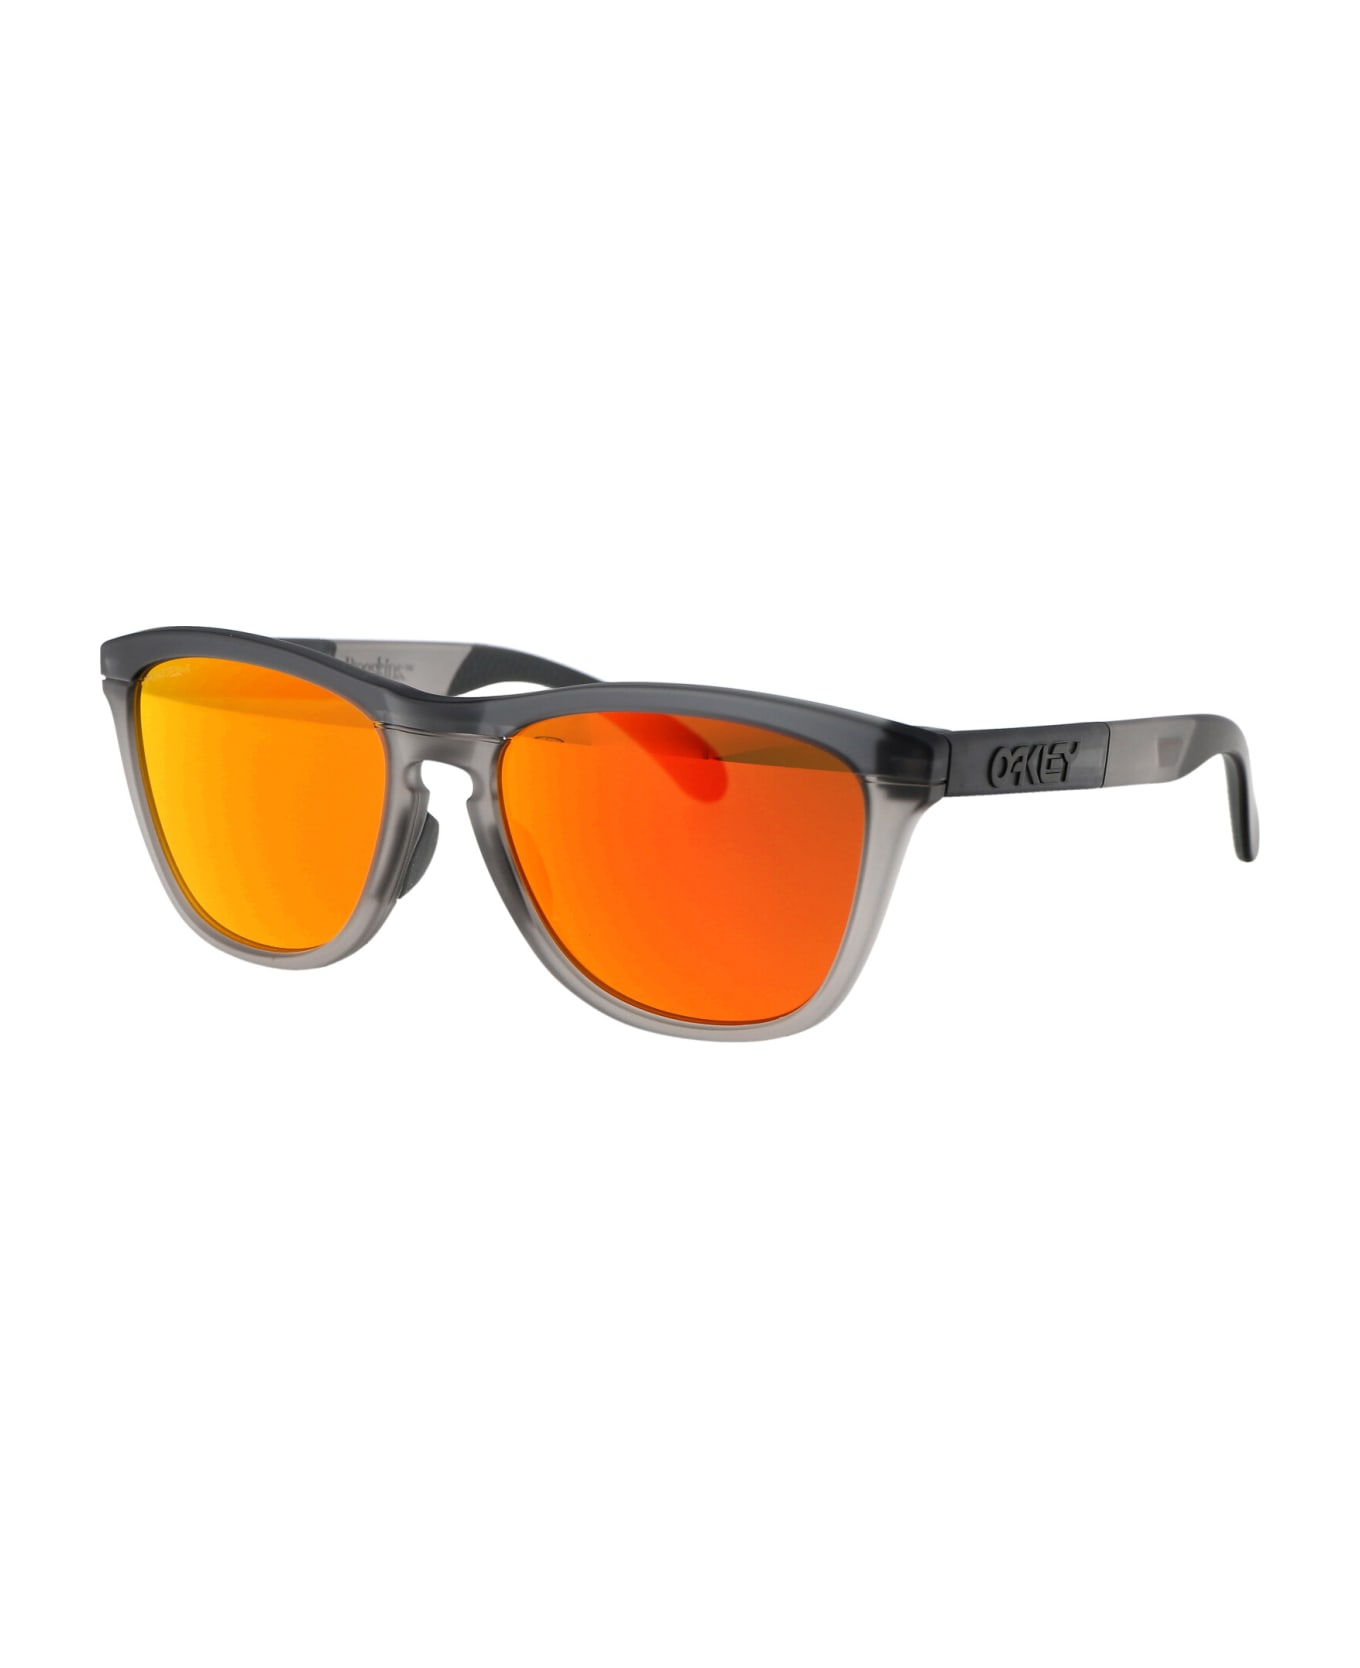 Oakley Frogskins Range Sunglasses - Red サングラス